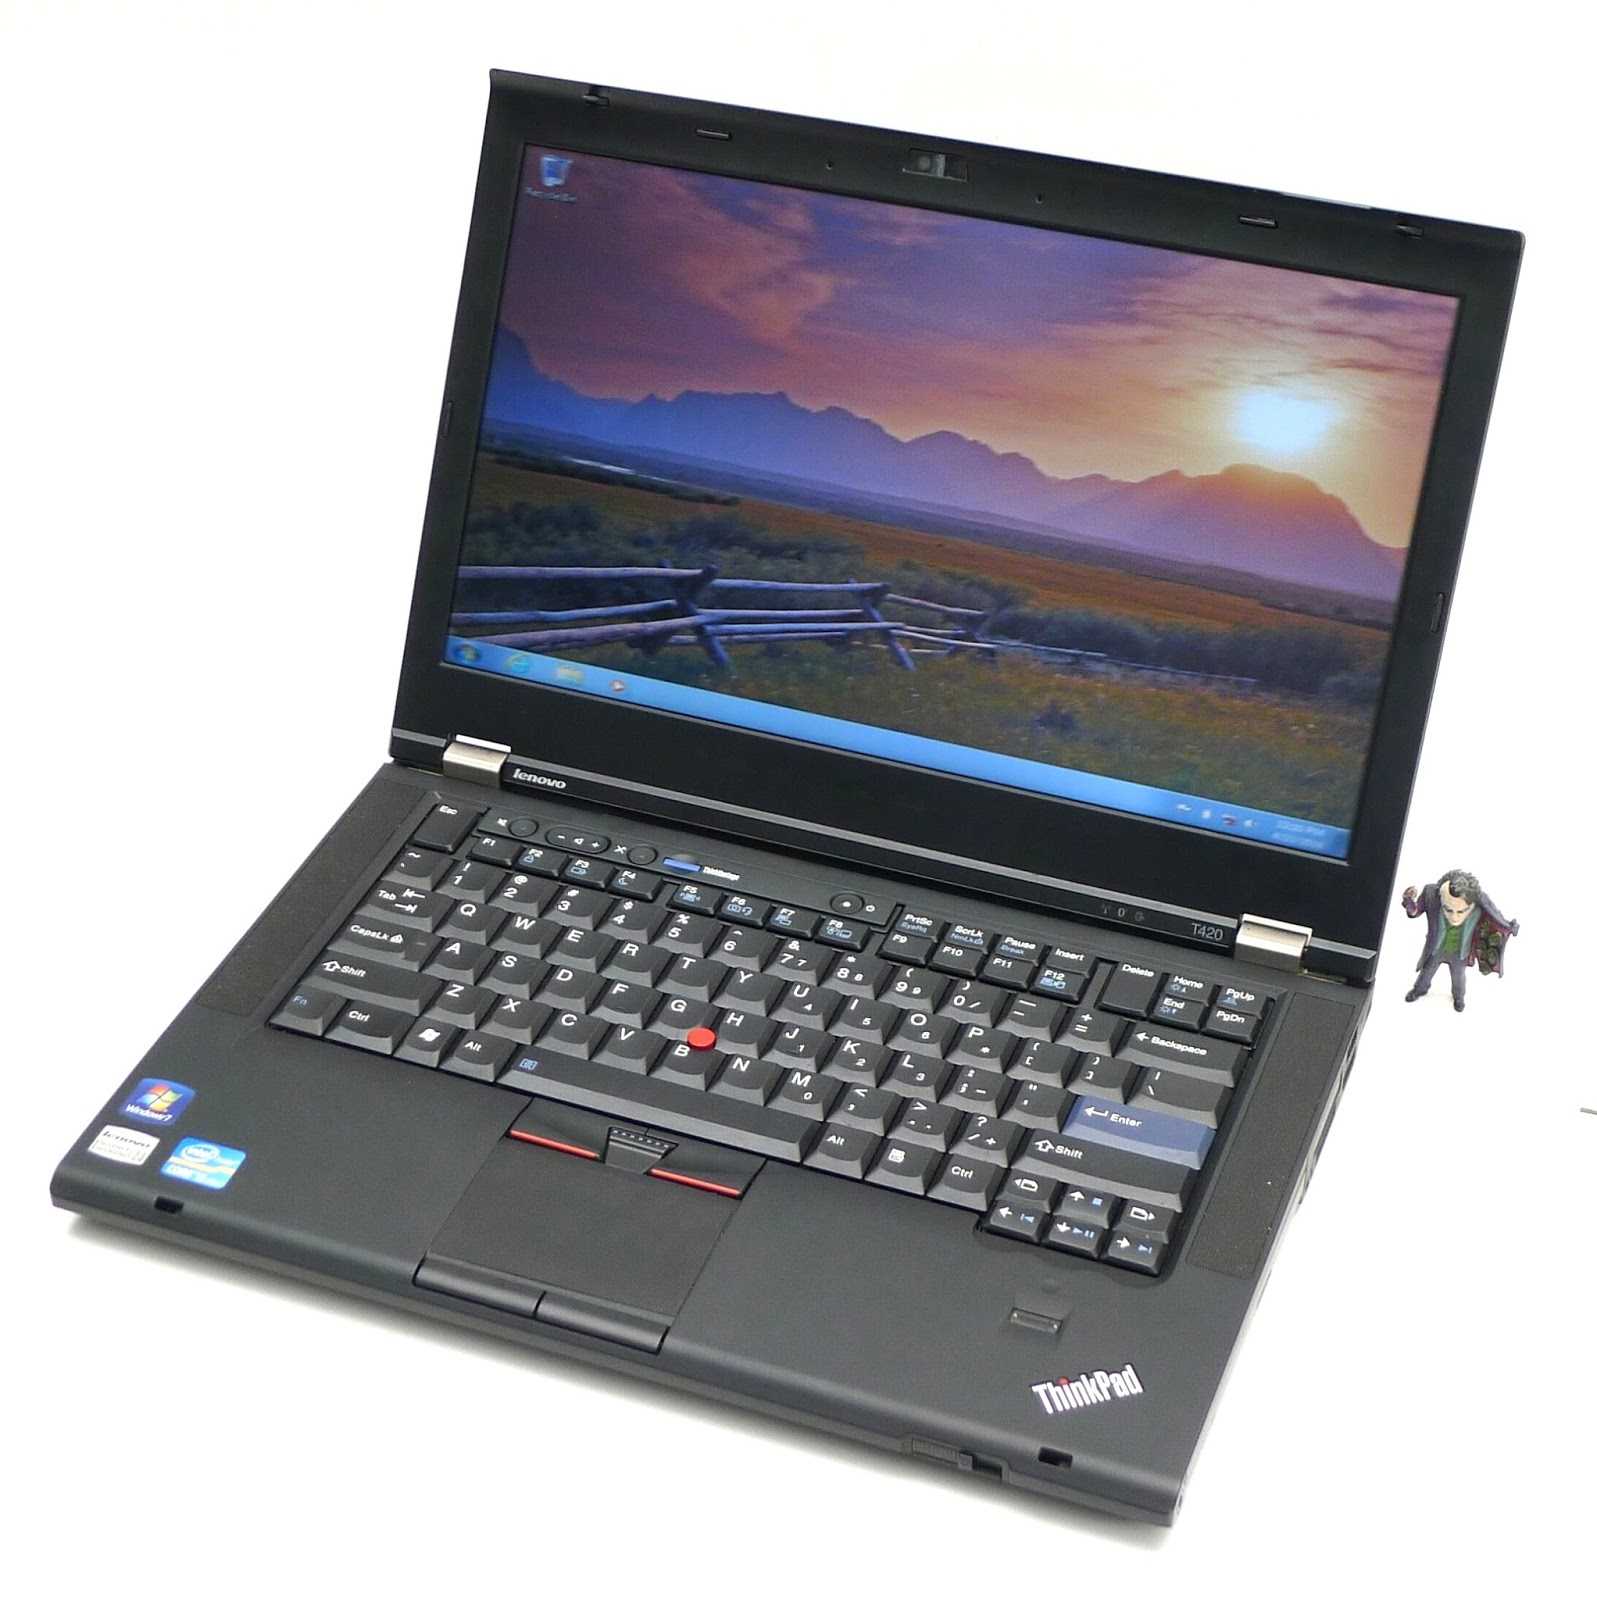 Ноутбук lenovo thinkpad t530 — купить, цена и характеристики, отзывы